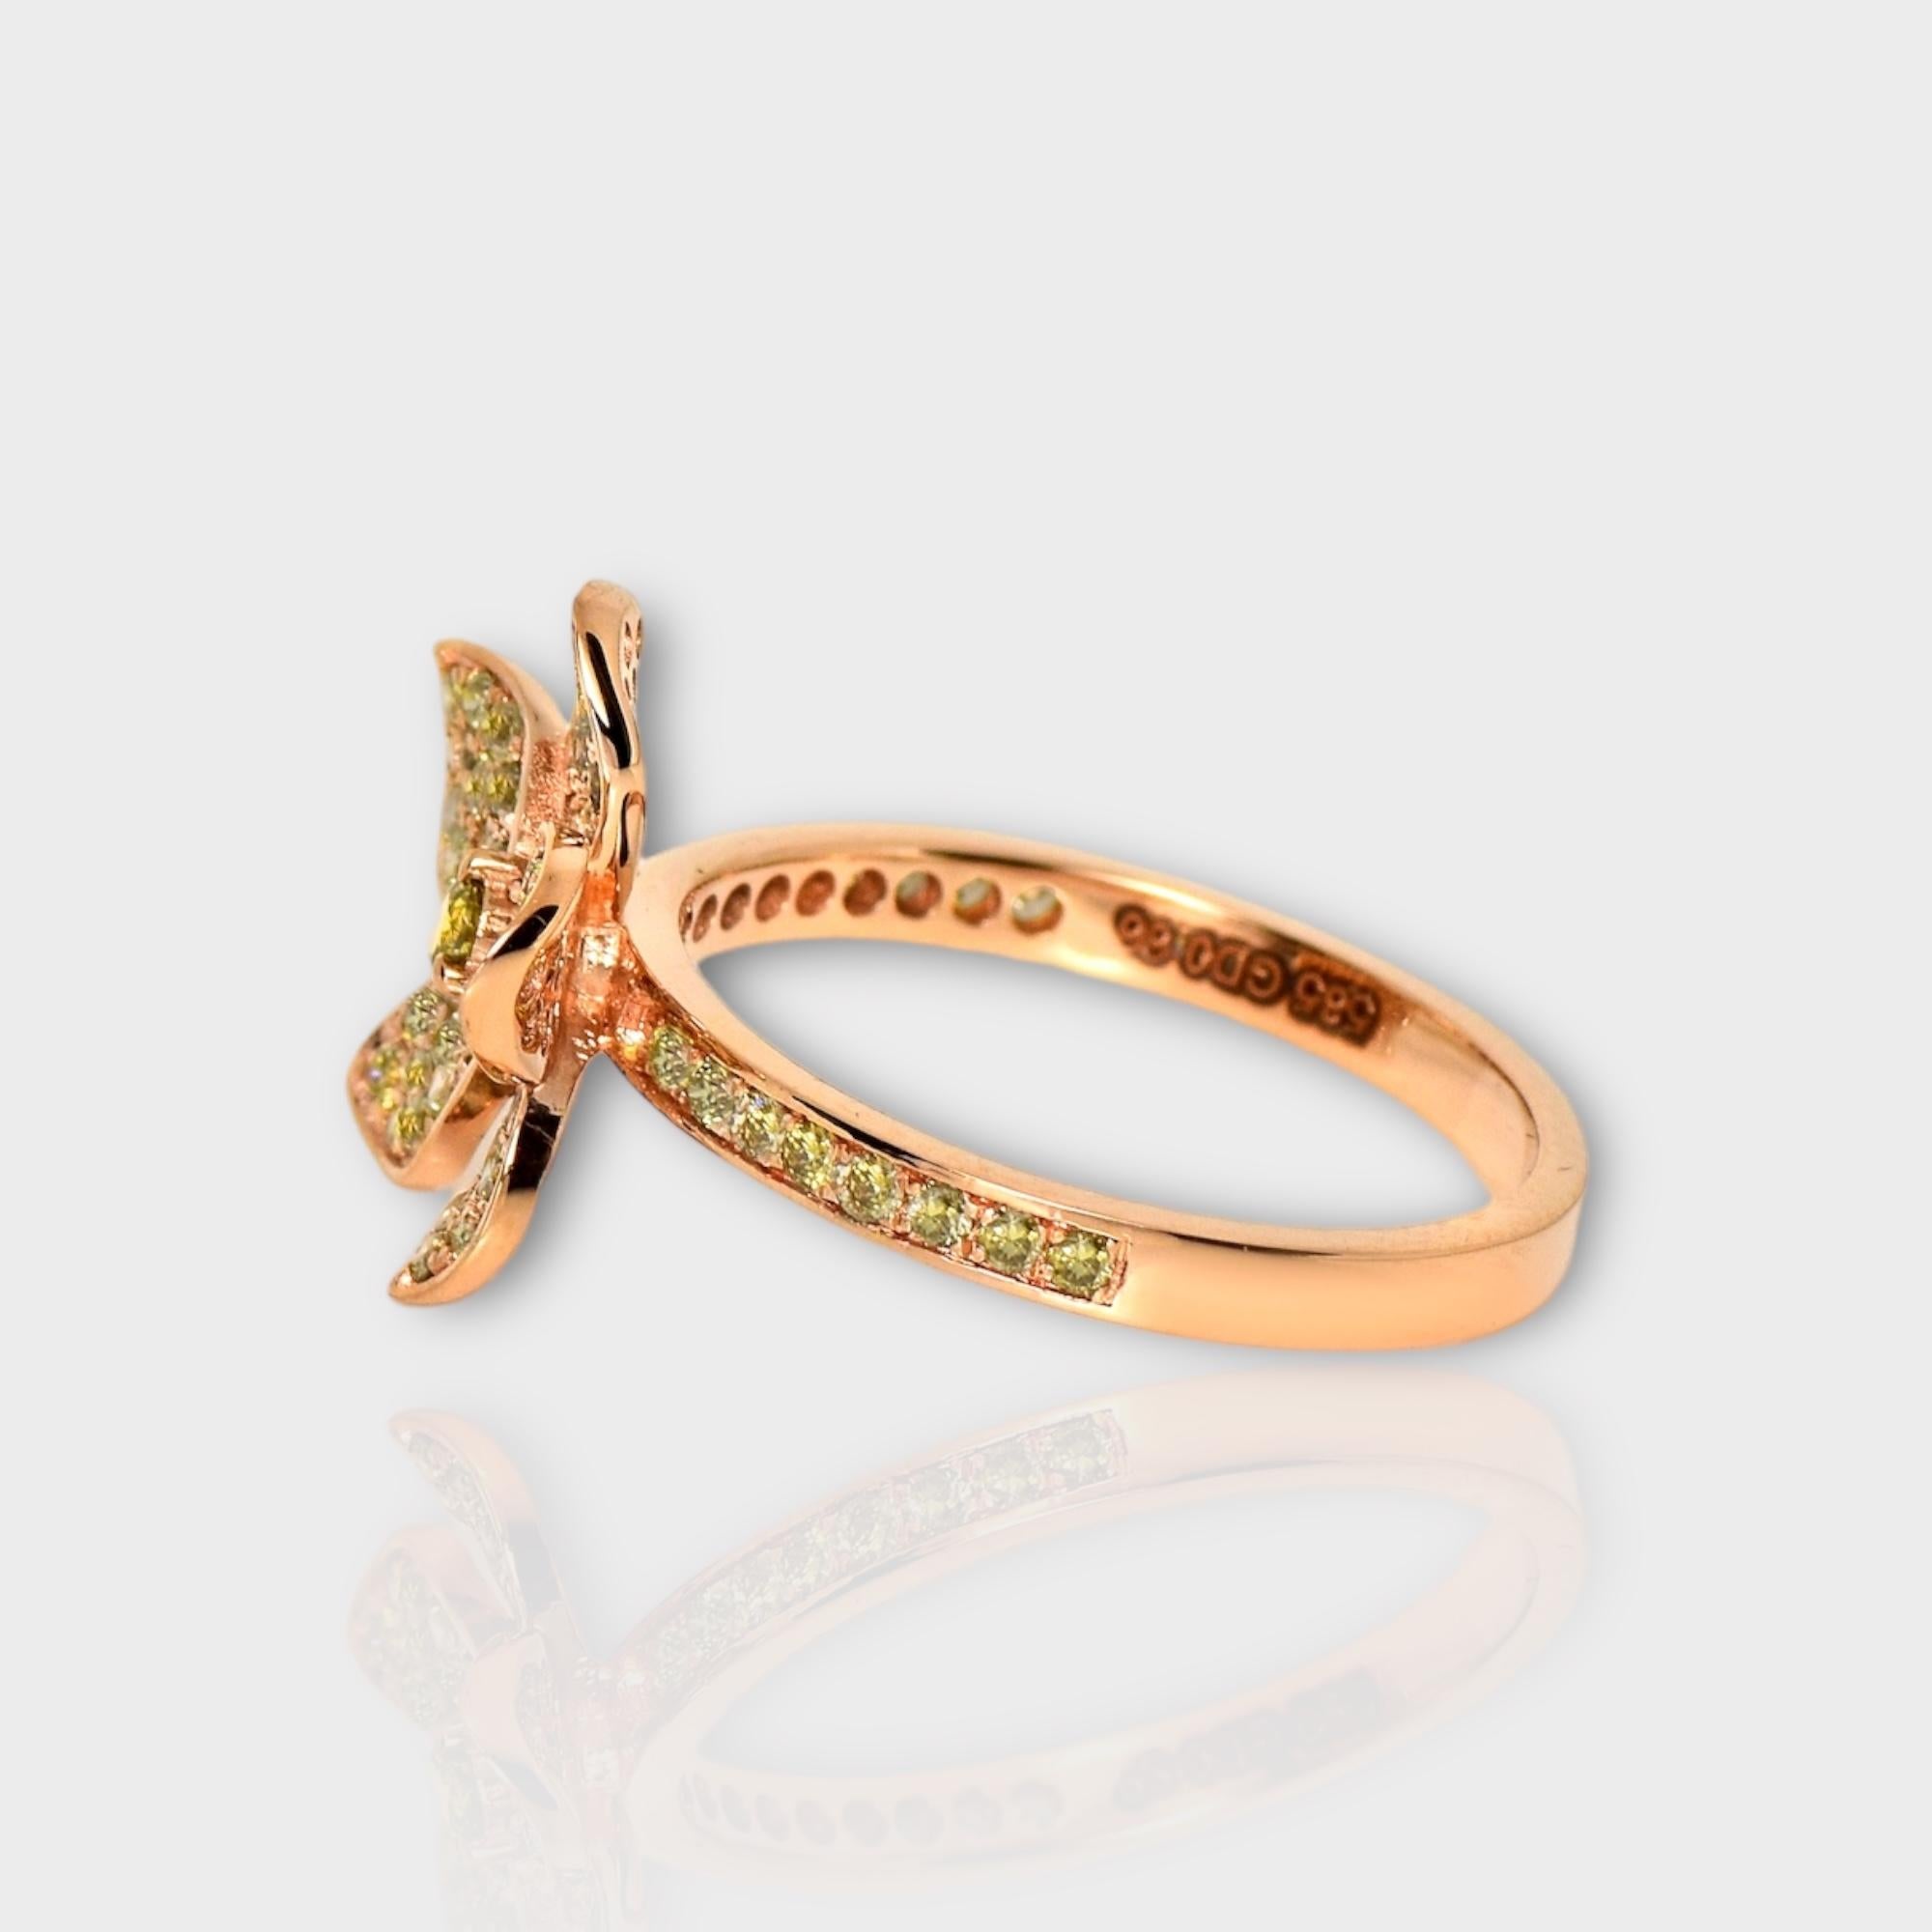 Round Cut IGI 14K 0.66 ct Natural Greenish Yellow Diamond Flower Design Engagement Ring For Sale